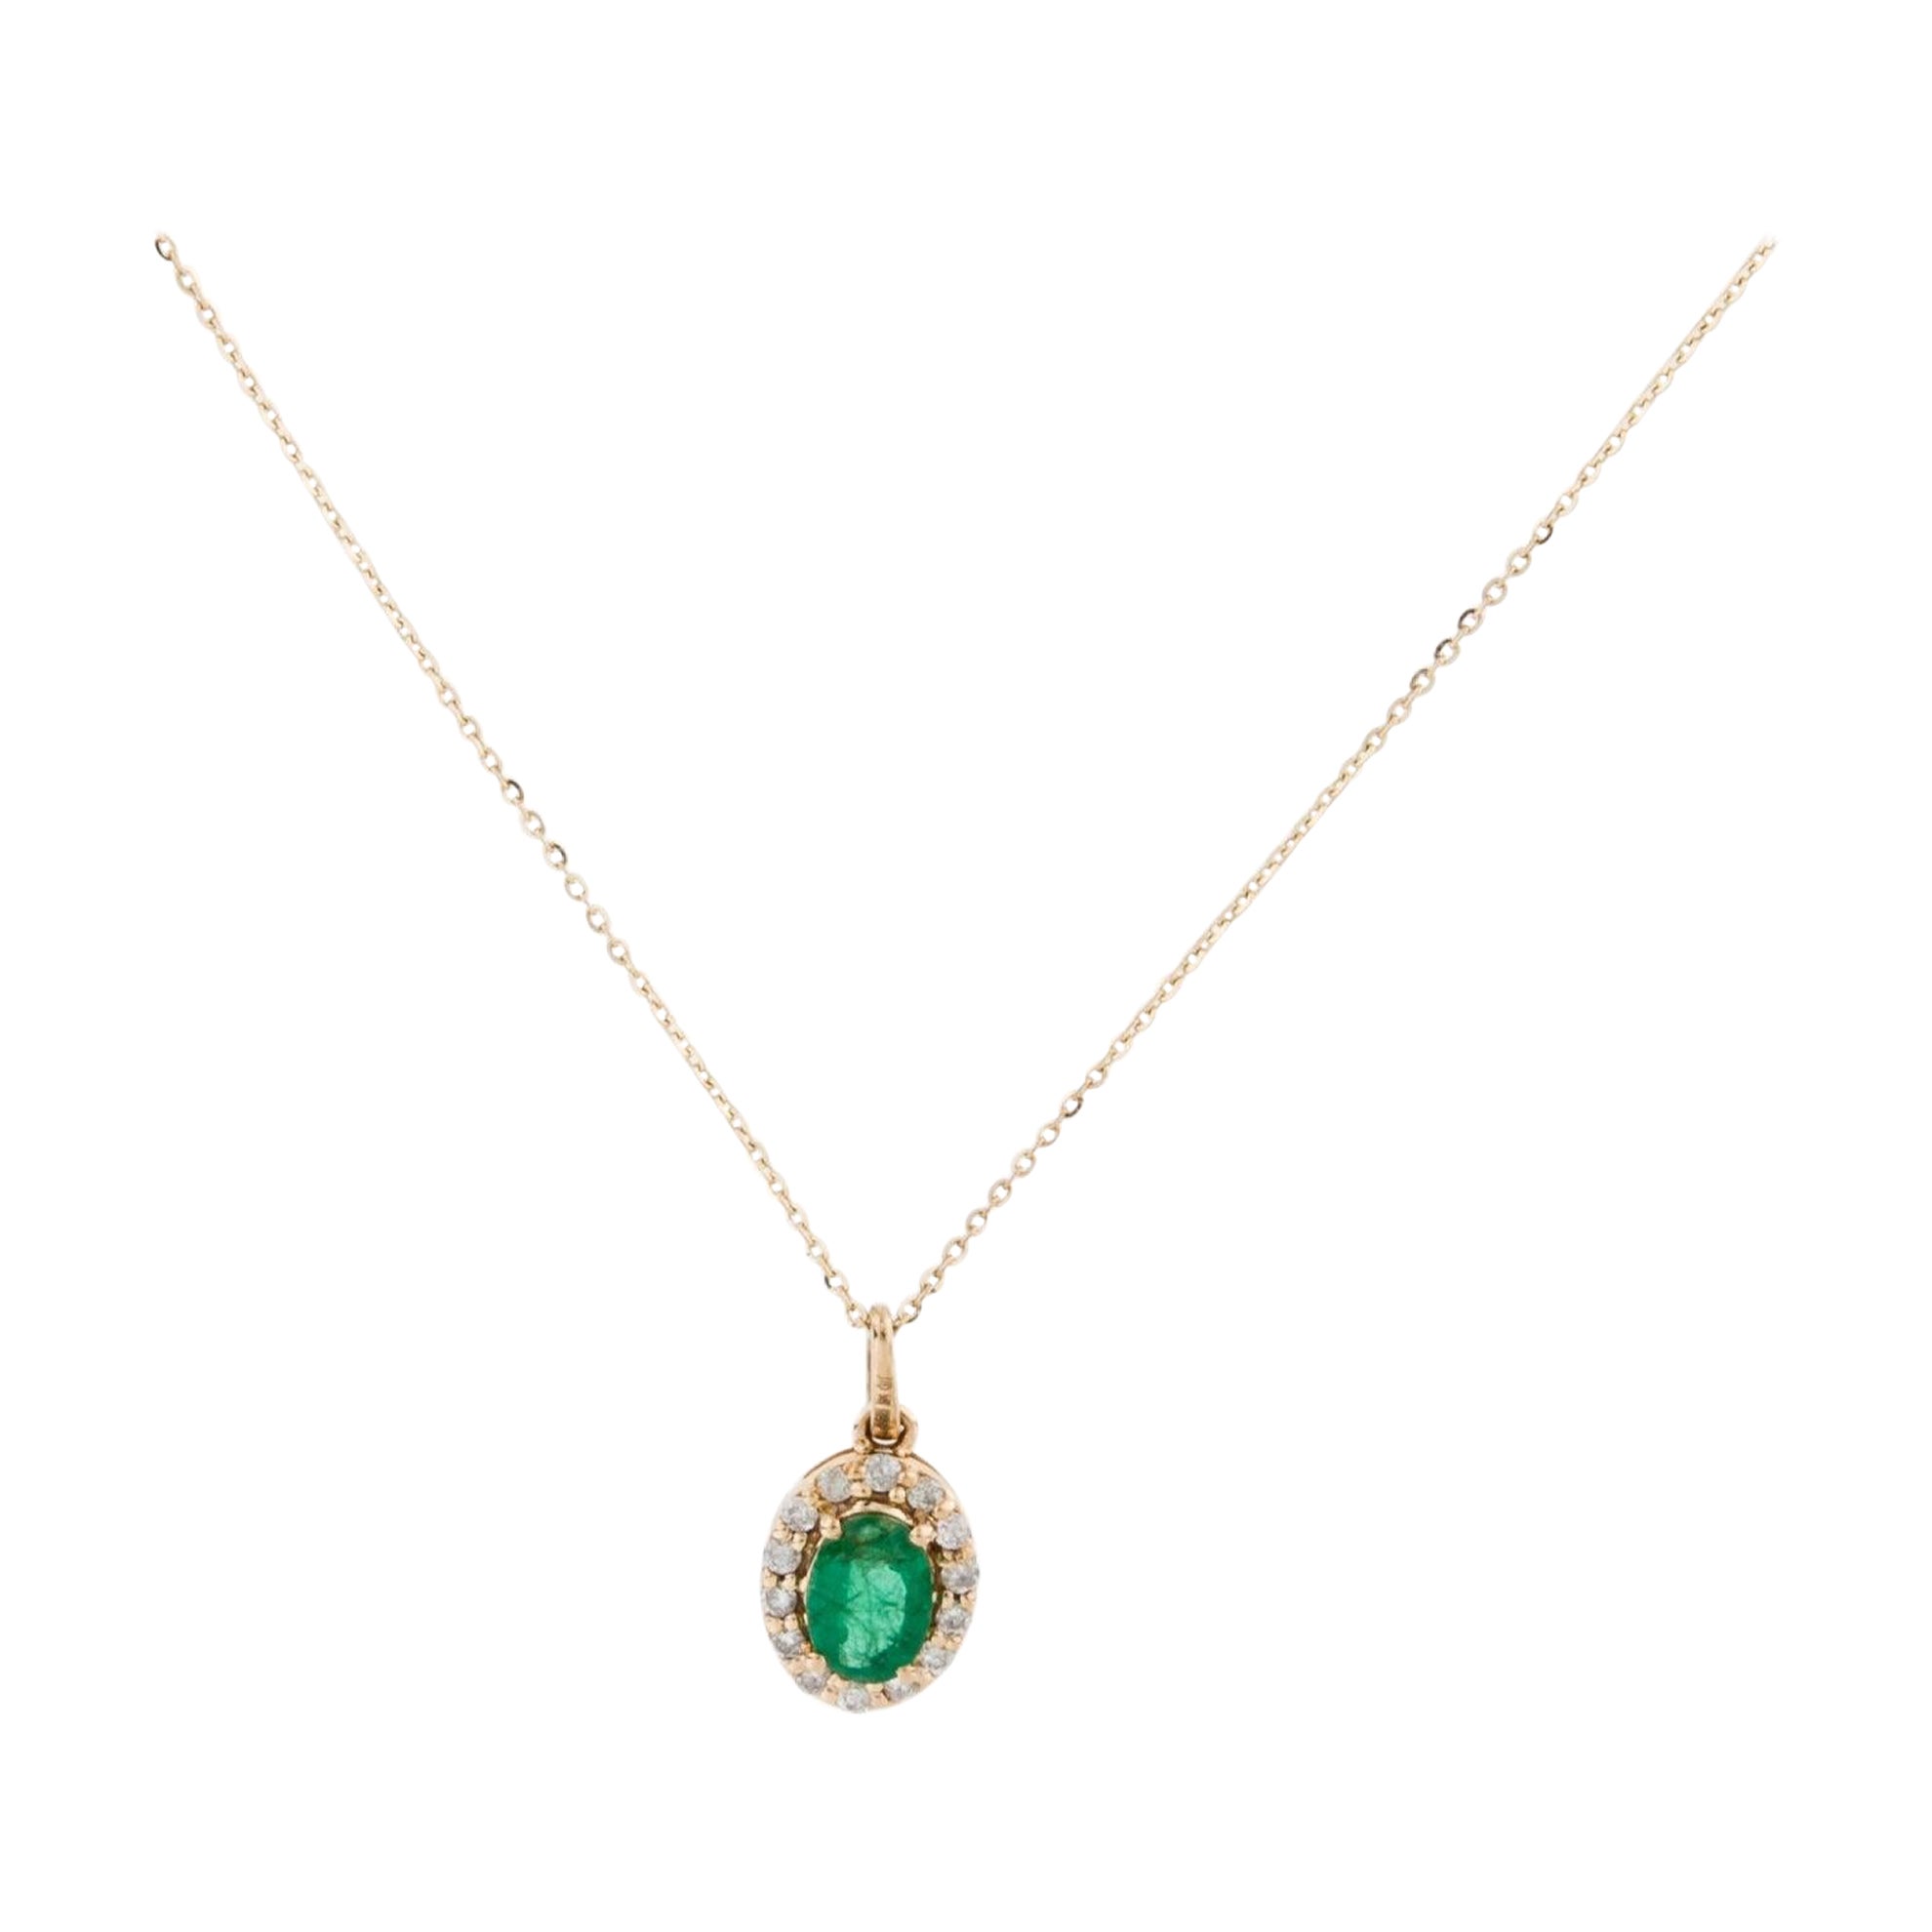 14K Emerald & Diamond Pendant Necklace: Exquisite Luxury Statement Jewelry Piece For Sale